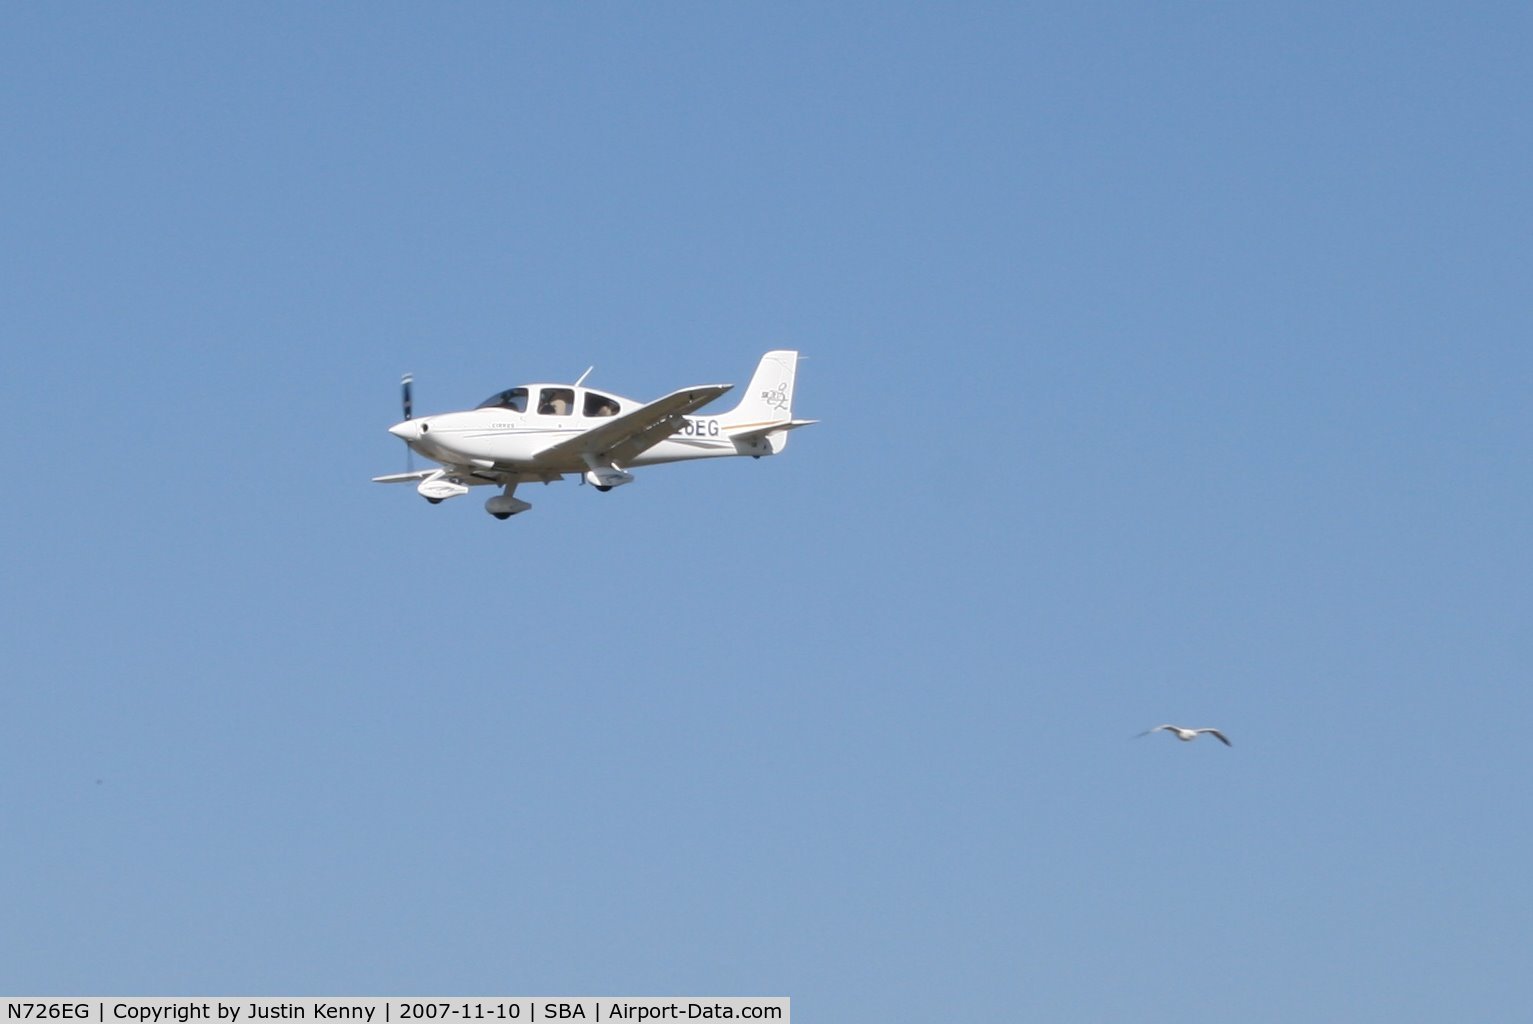 N726EG, 2004 Cirrus SR20 C/N 1442, N726EG Landing at SBA.